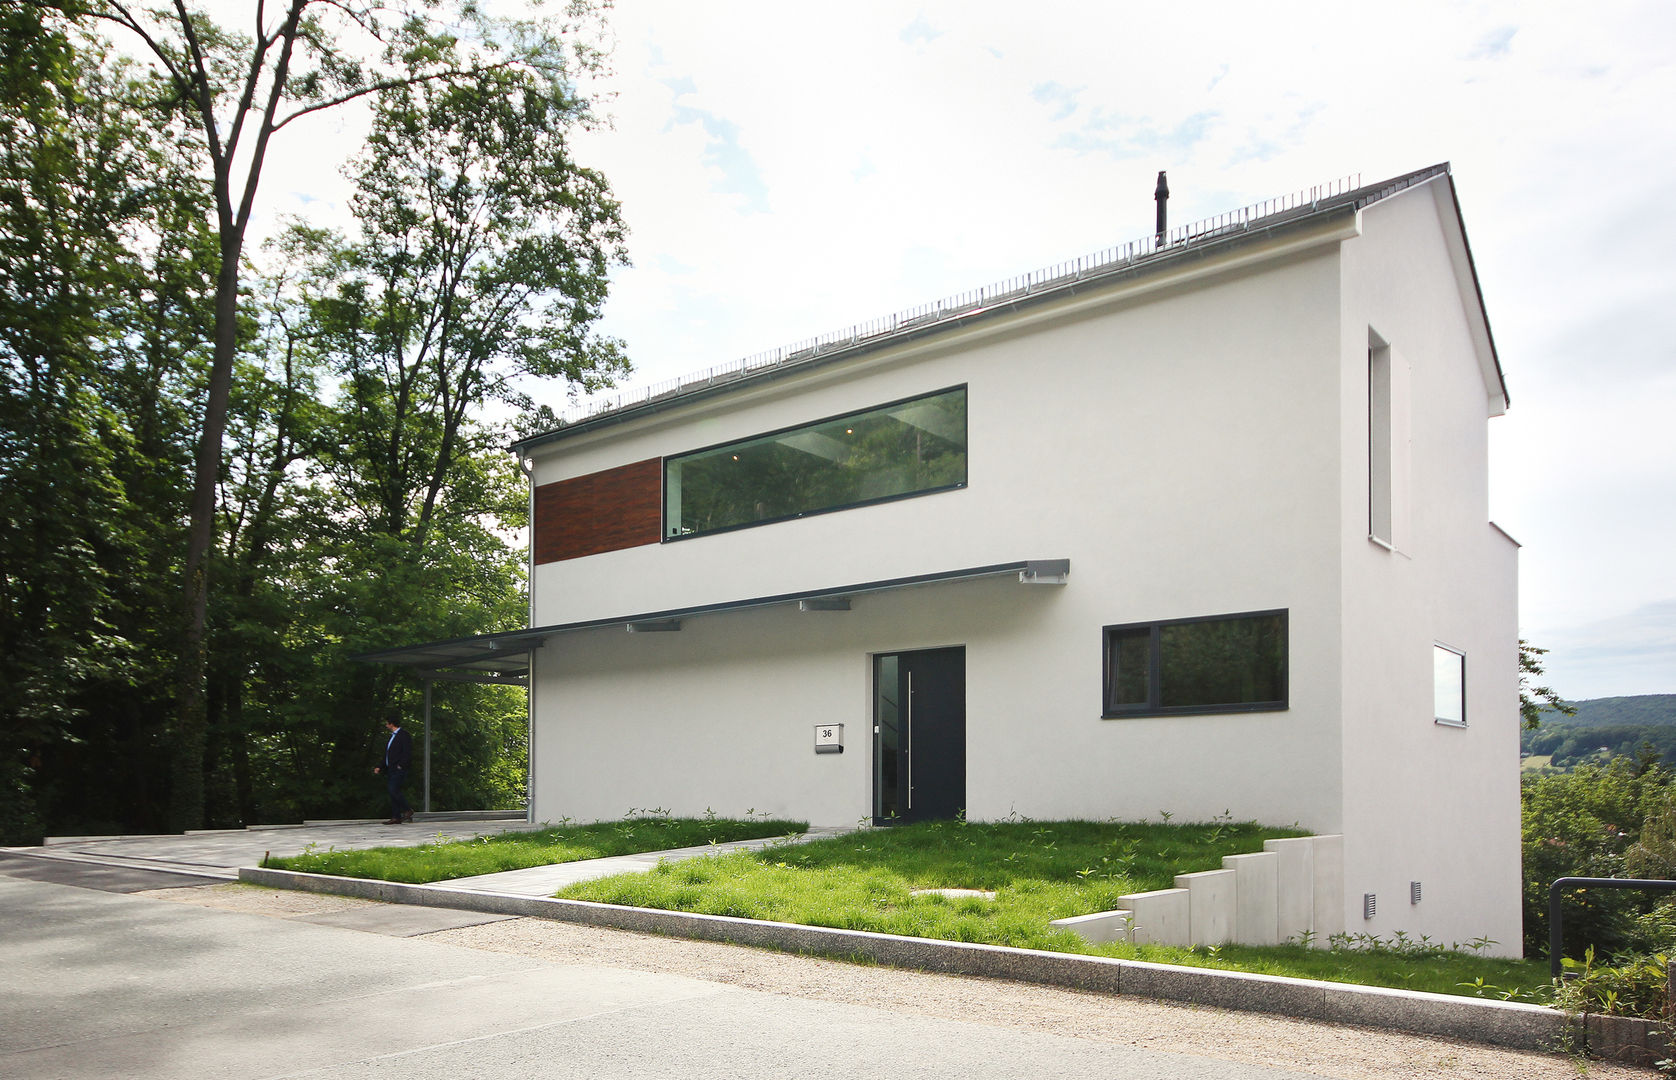 Einfamilienhaus Rudolstadt, Planungsgruppe Korb GmbH Architekten & Ingenieure Planungsgruppe Korb GmbH Architekten & Ingenieure Casas modernas